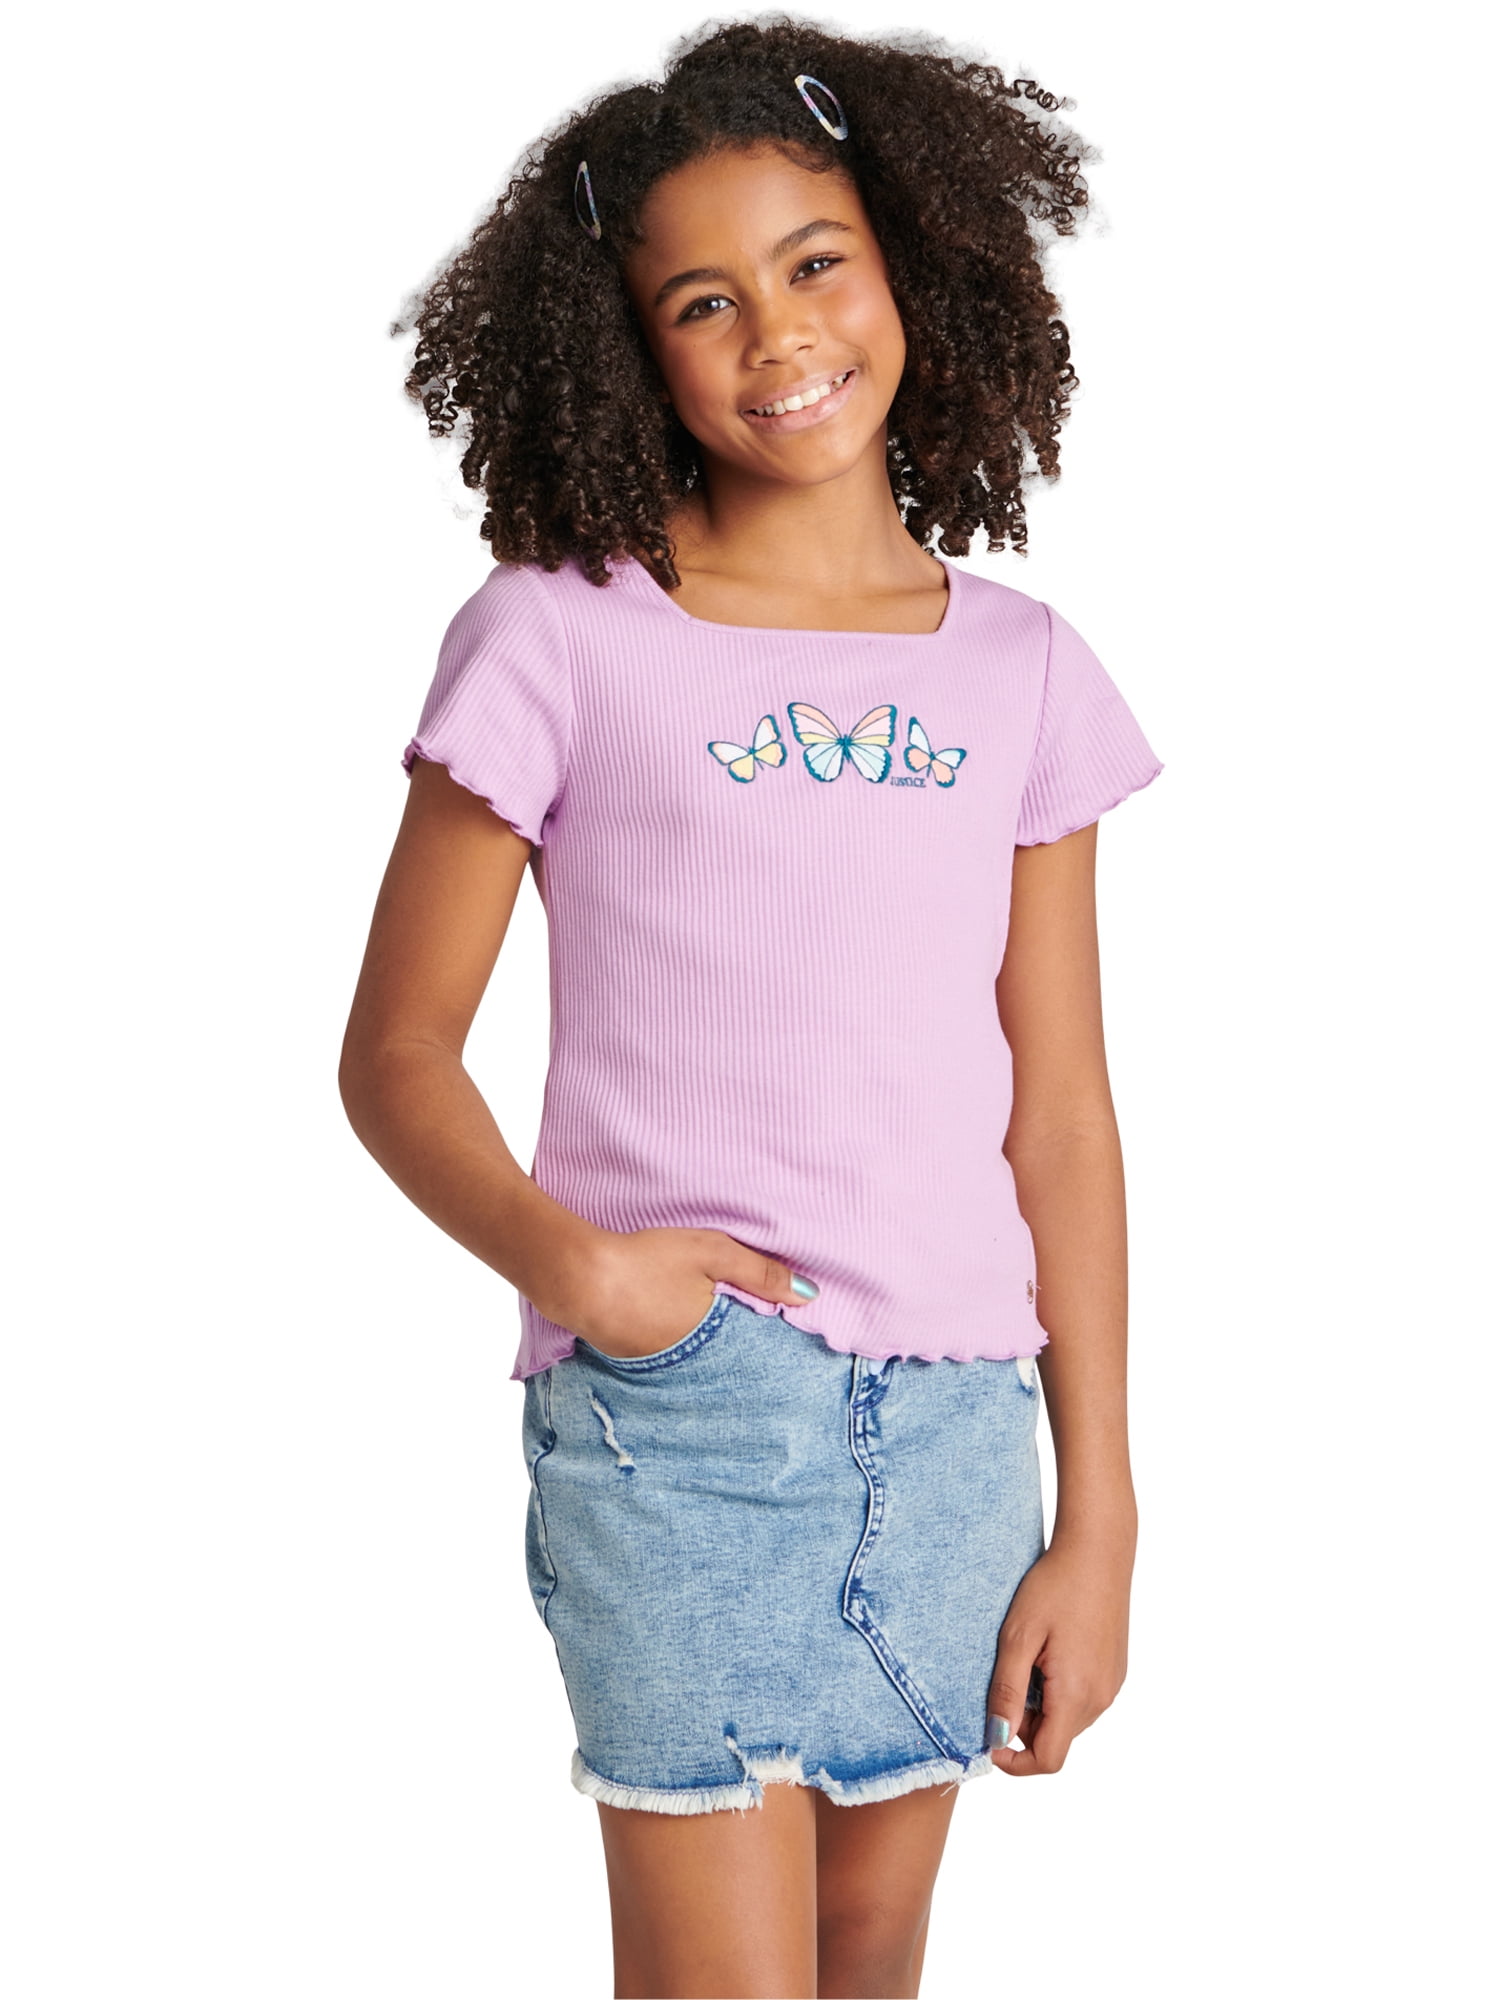 Kids Boys Girls Galaxy Animal 3D Graphic Print T-Shirt Short Sleeve Tee 6T-16T 